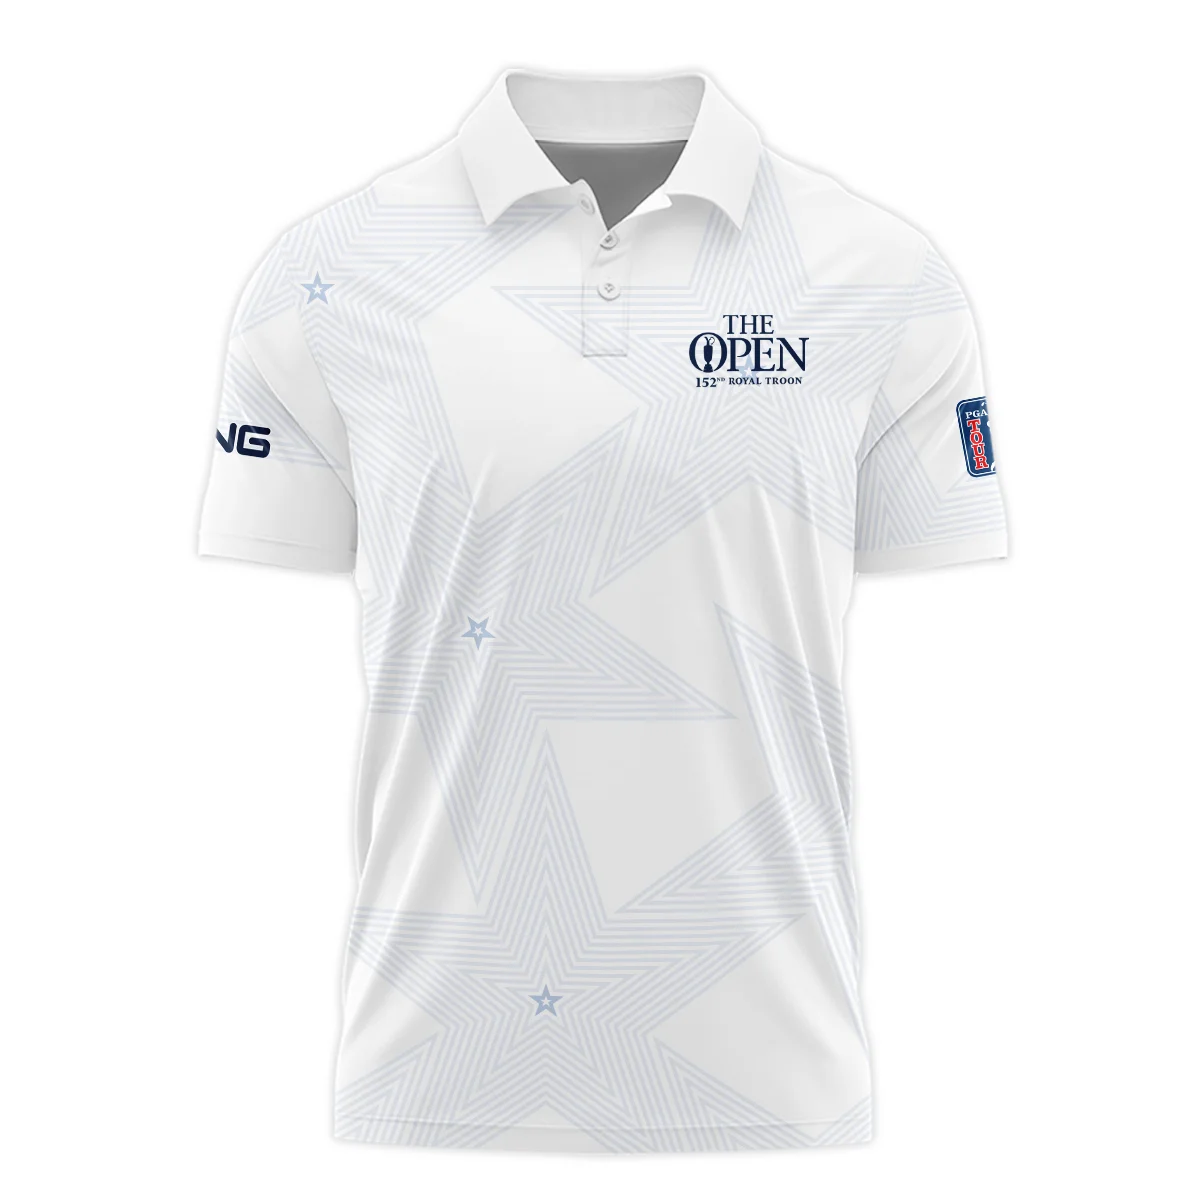 152nd The Open Championship Golf Ping Zipper Polo Shirt Stars White Navy Golf Sports All Over Print Zipper Polo Shirt For Men